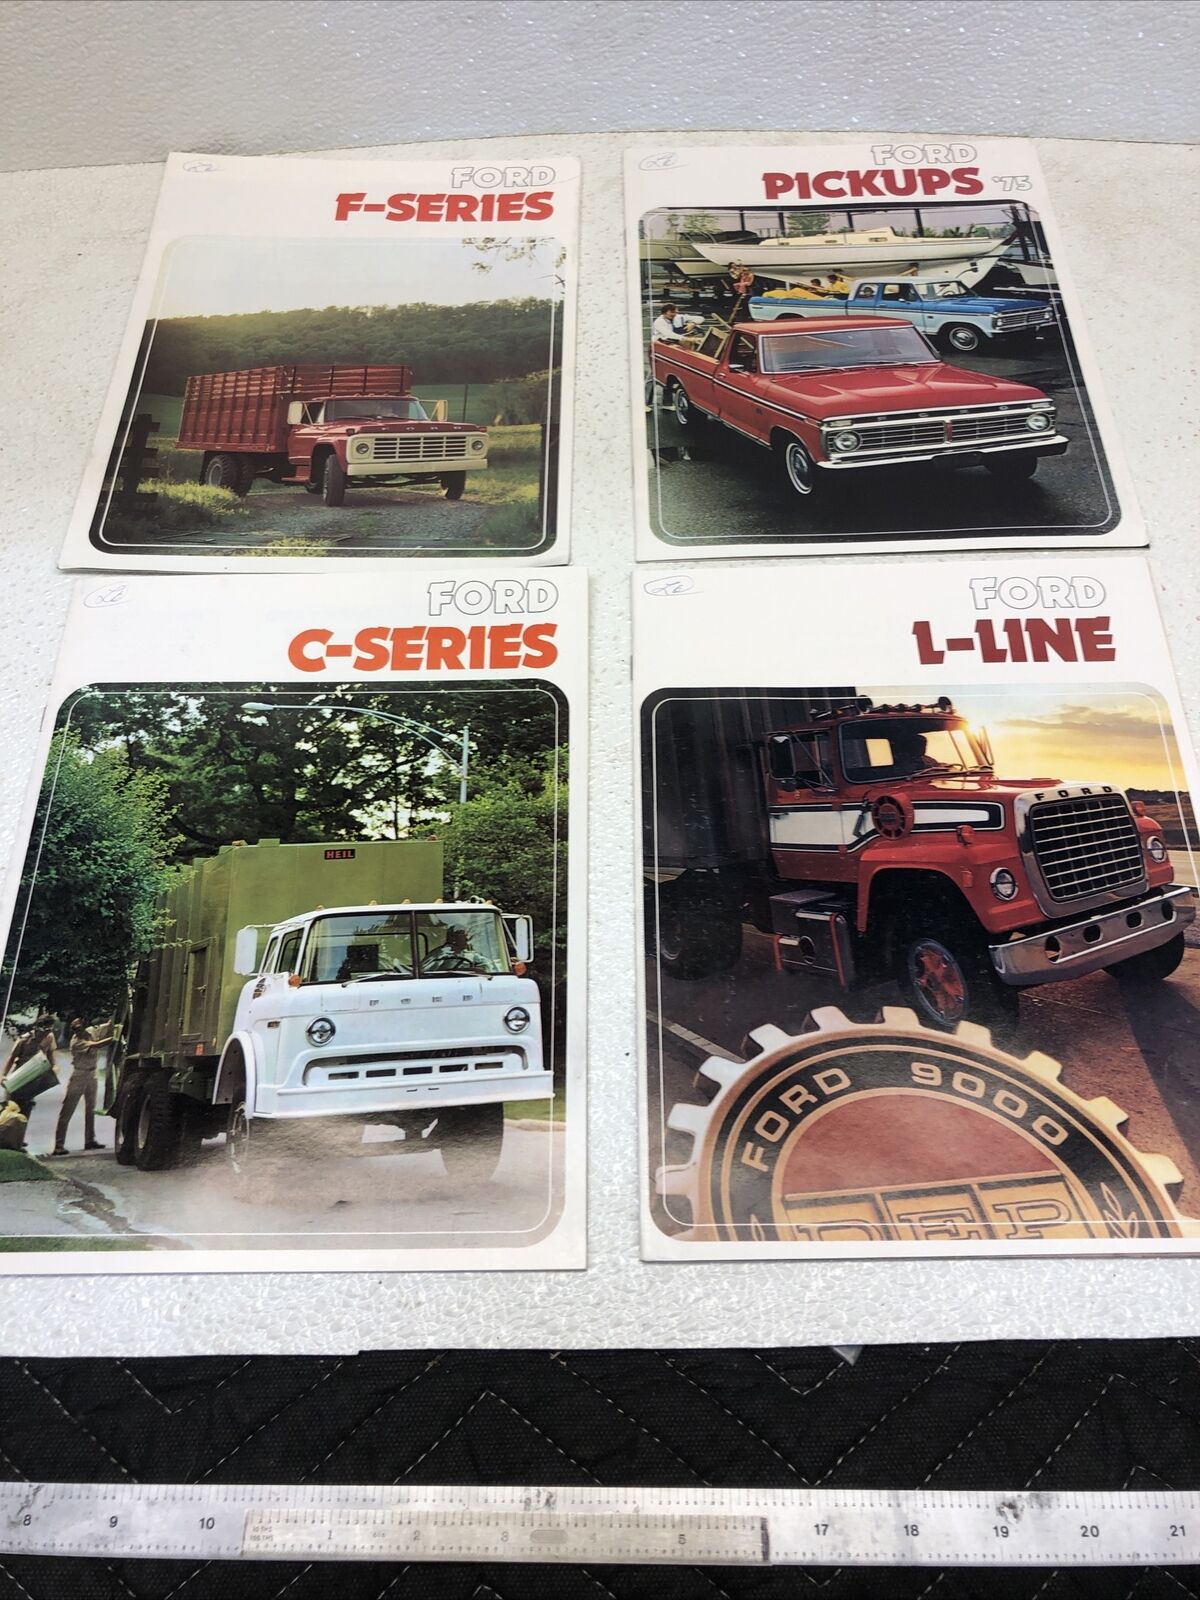 4 Original 1975 Ford Sales Brochures, F-series, C-series, L-line, & Ford Pickups